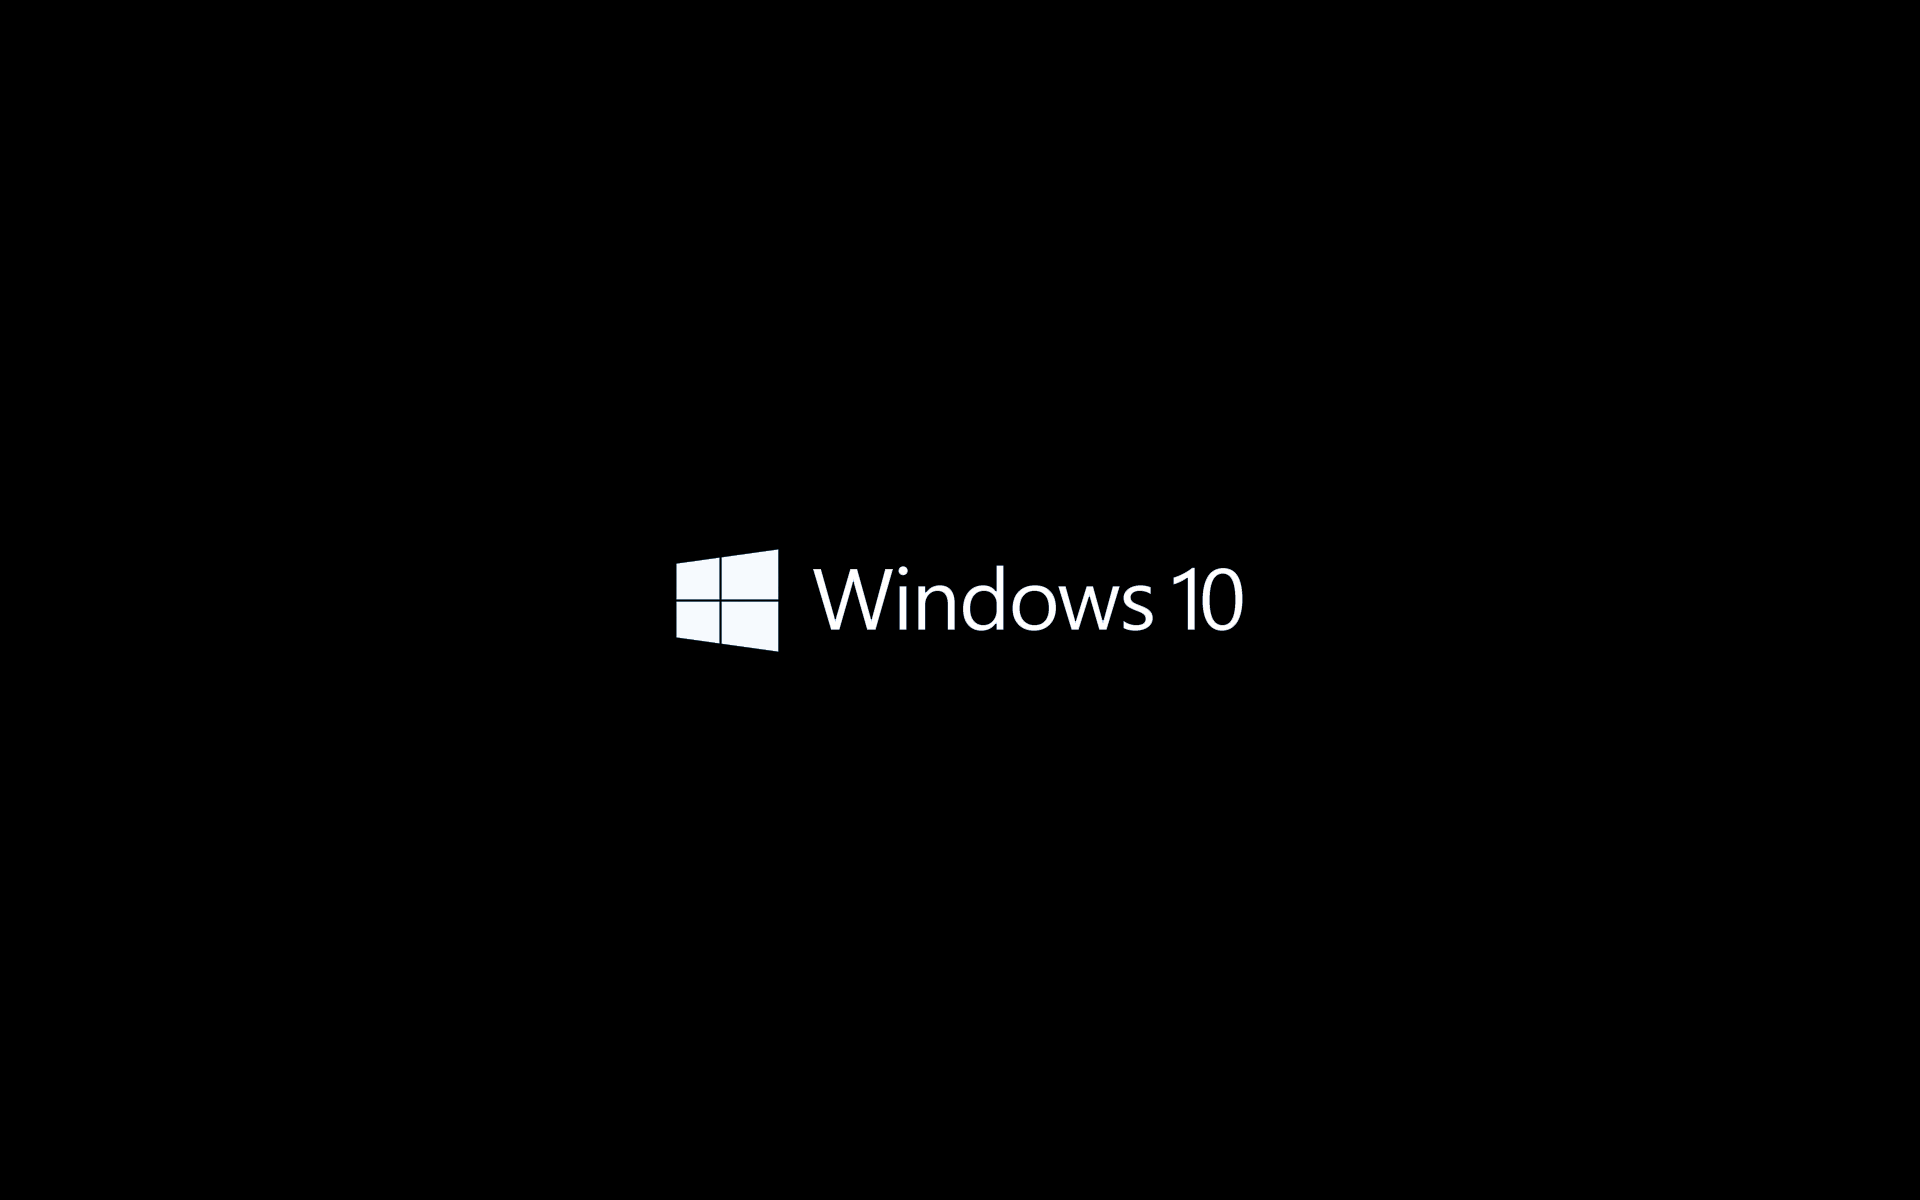 General 1920x1200 Windows 10 Microsoft Windows operating system minimalism logo black background